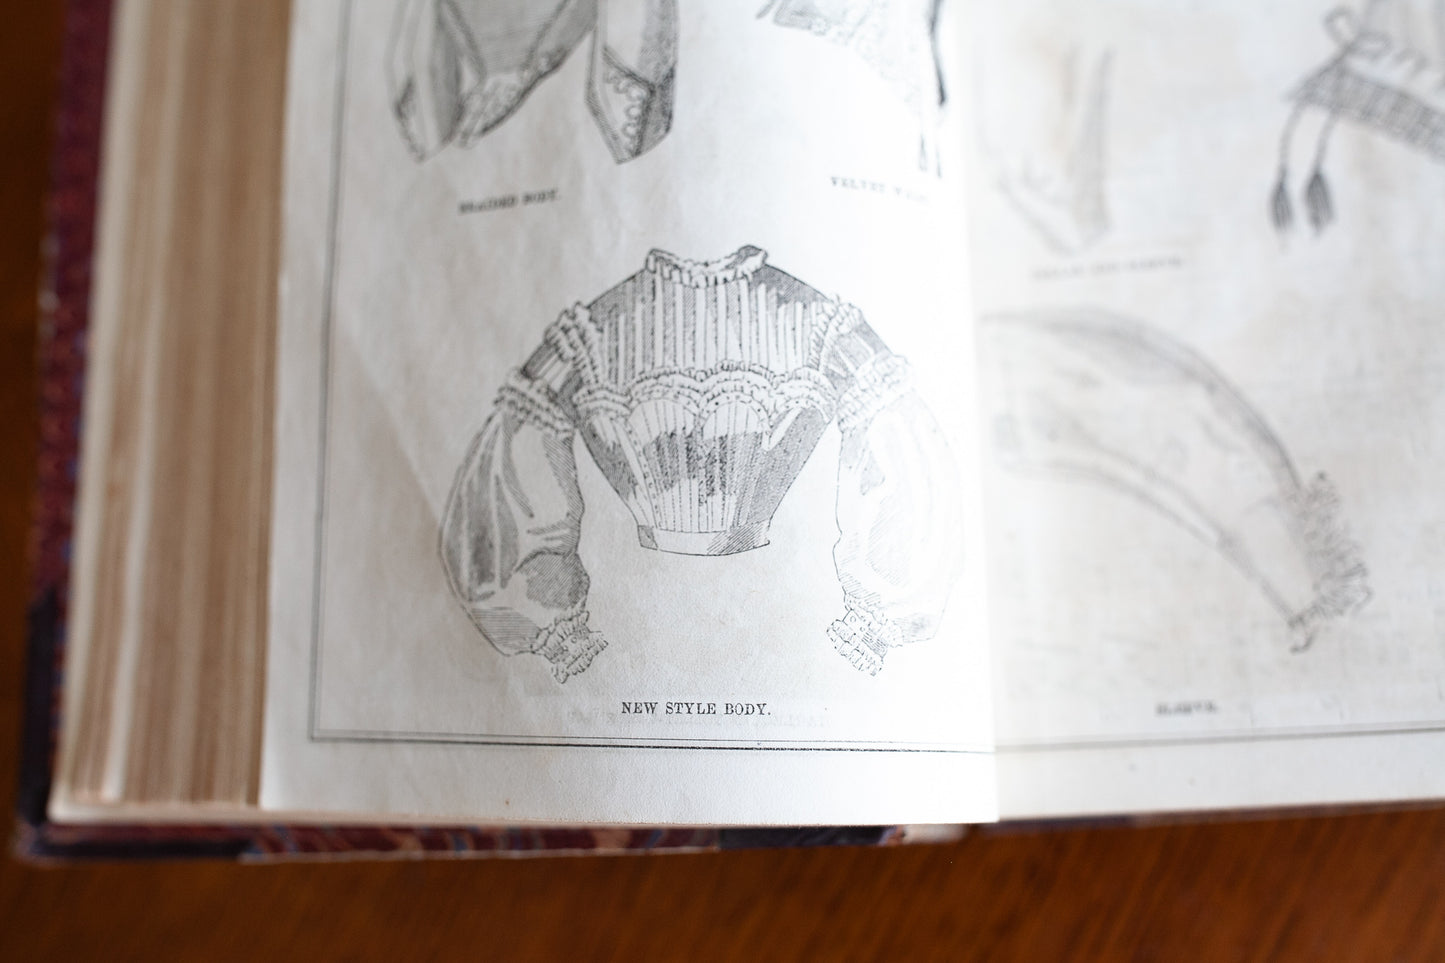 Antique Book- 1864 Peterson’s Magazine - Civil War Fashion Dresses Clothing Hairstyles Craft Art